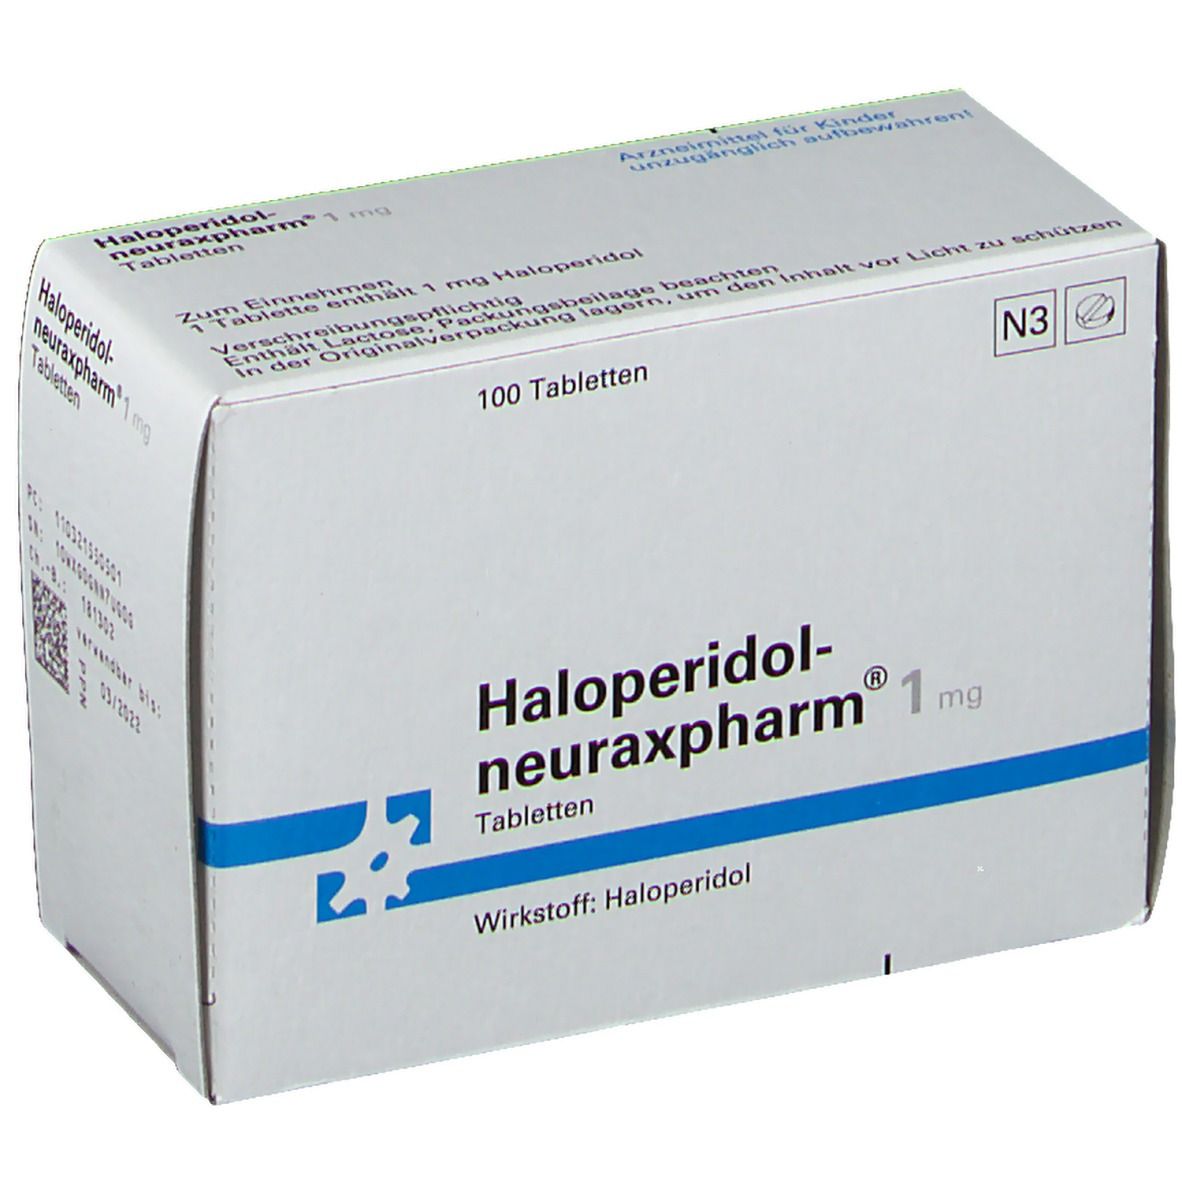 Haloperidol-neuraxpharm® 1 mg